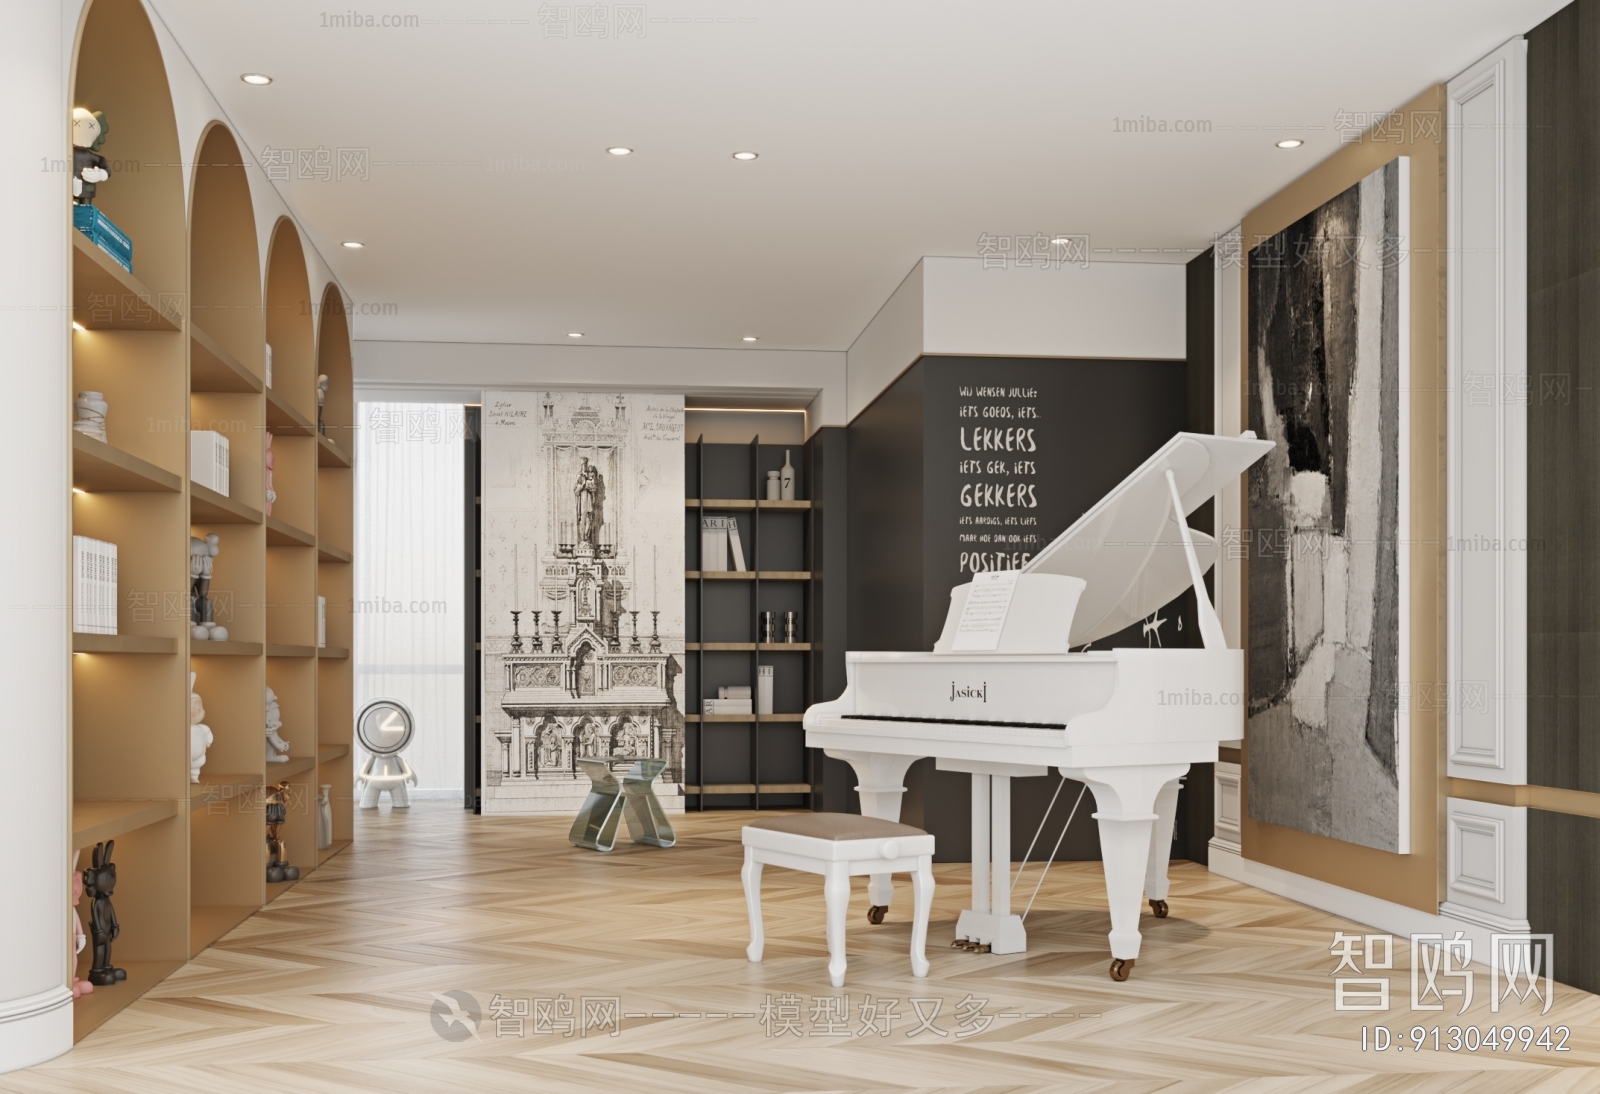 Simple European Style Piano Room